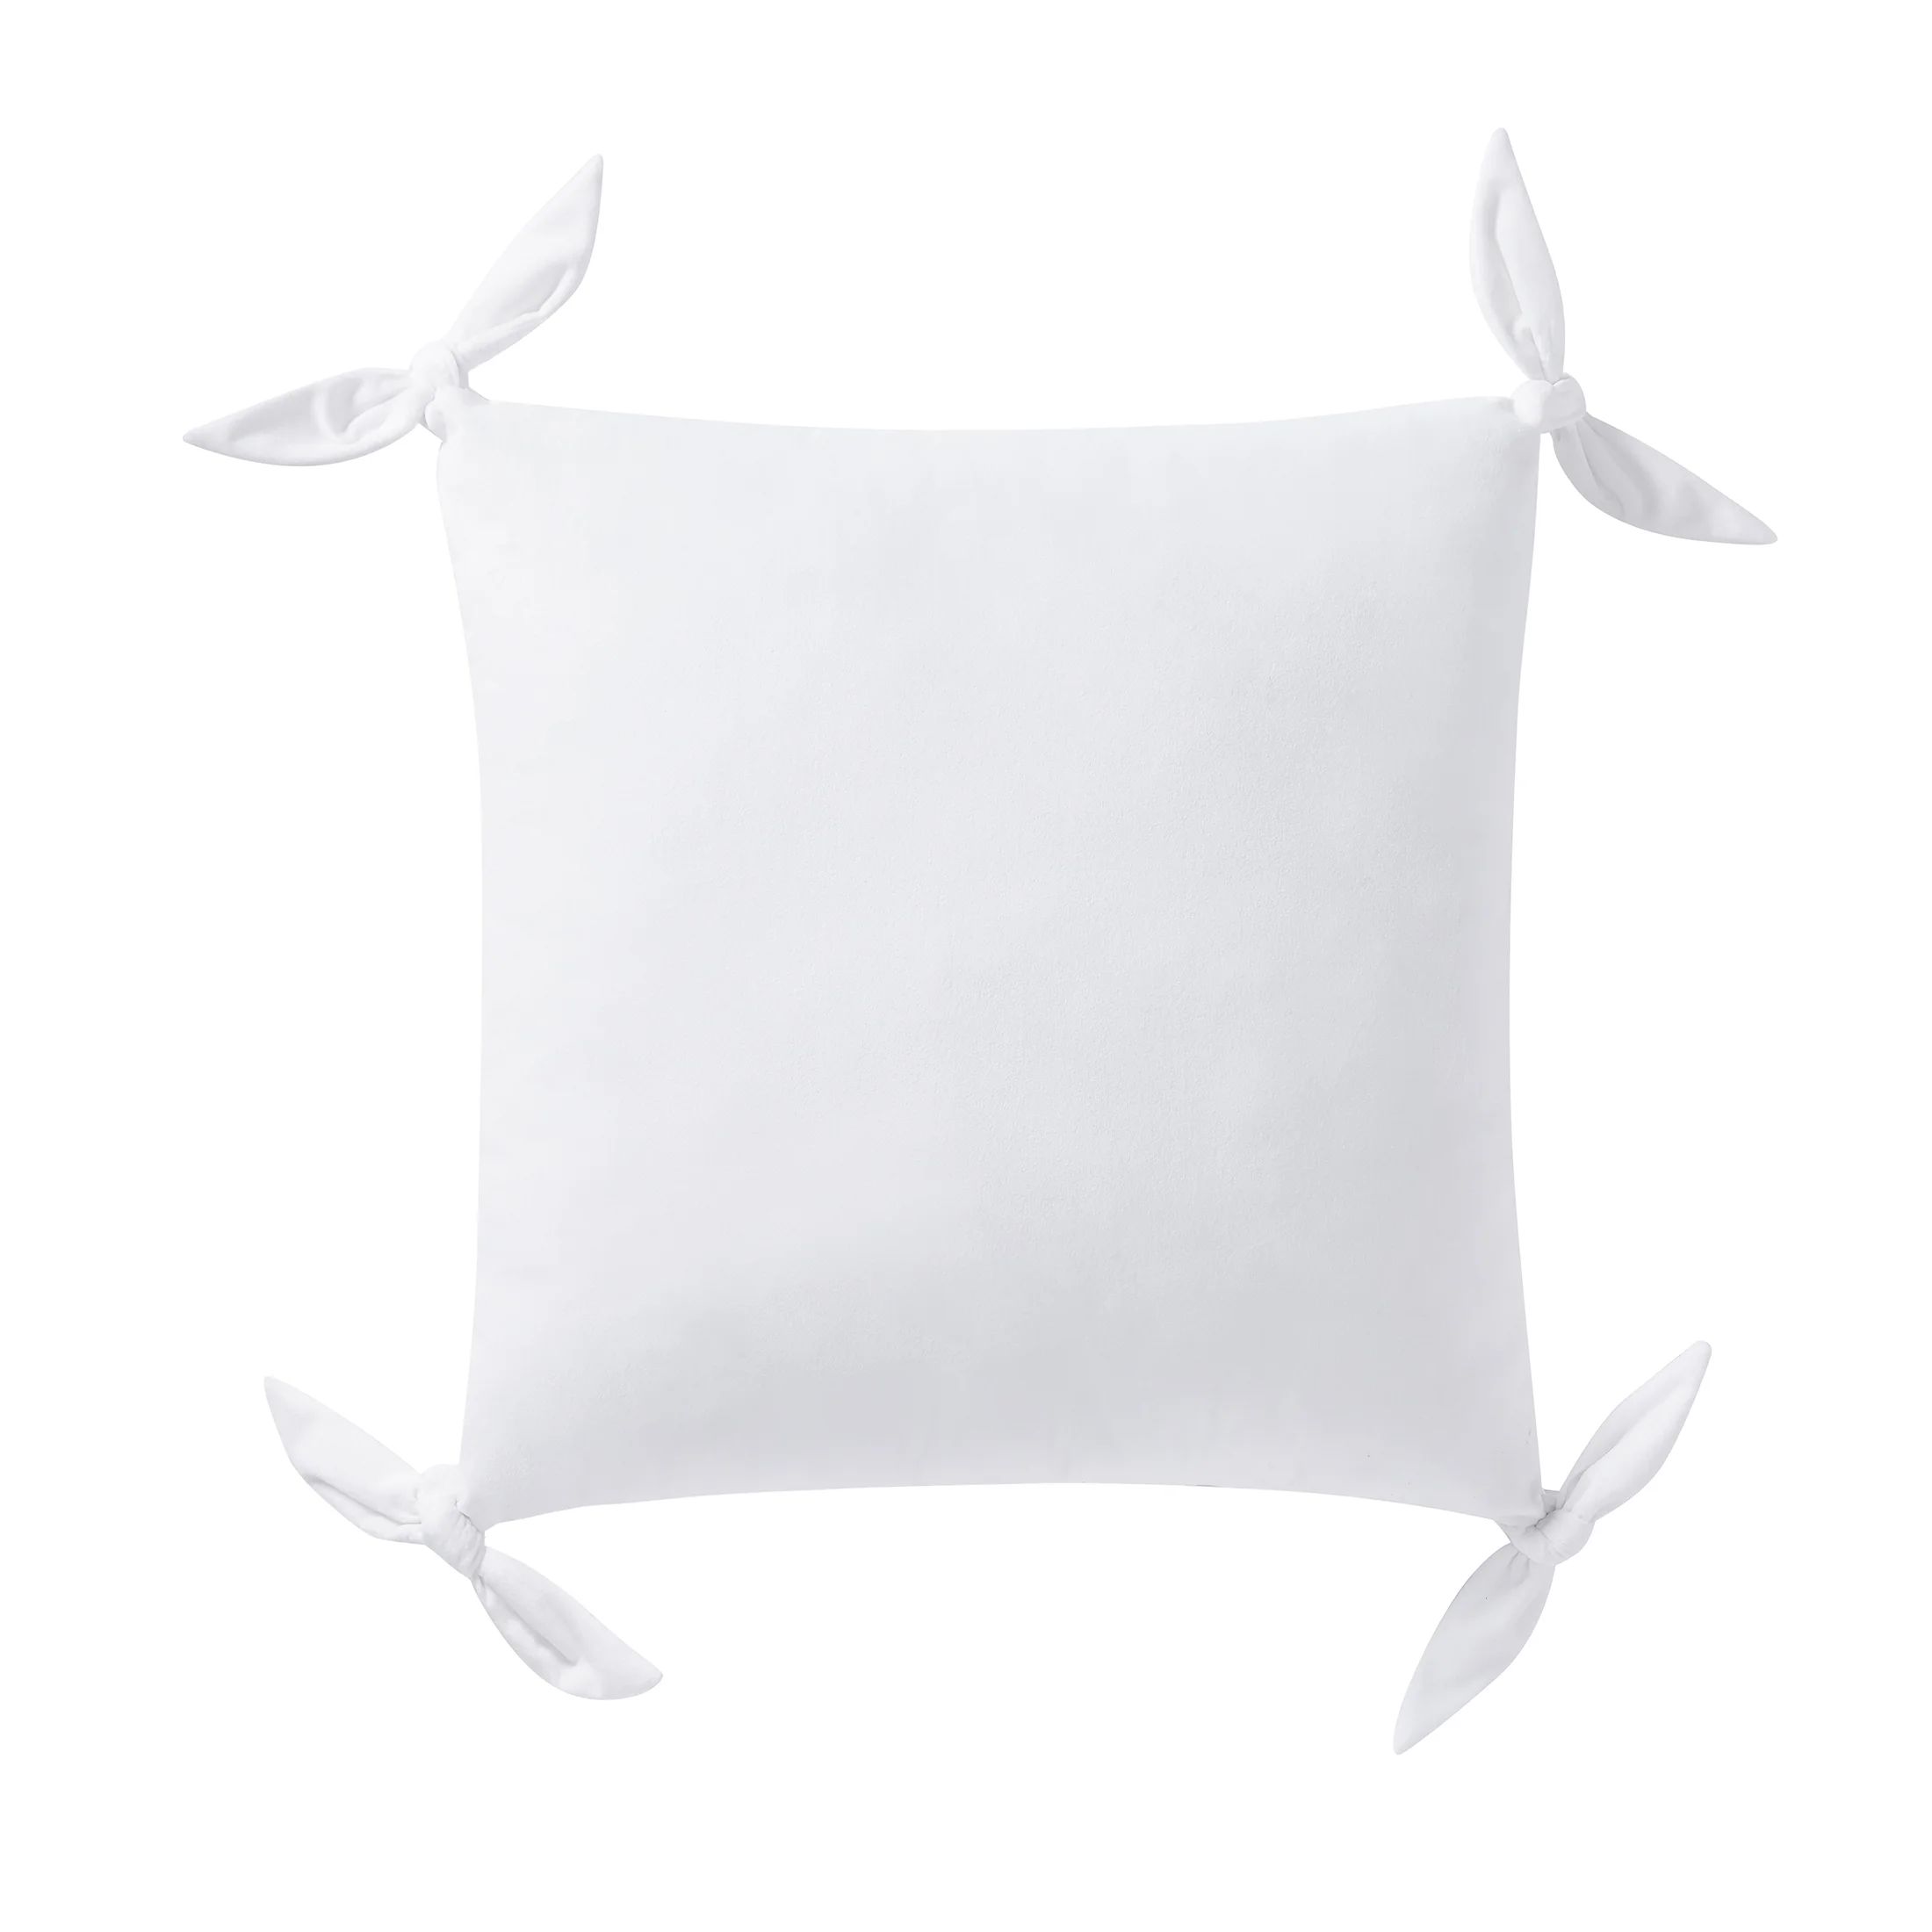 My Texas House 20" x 20" Solid White Velvet Tie Decorative Pillow | Walmart (US)